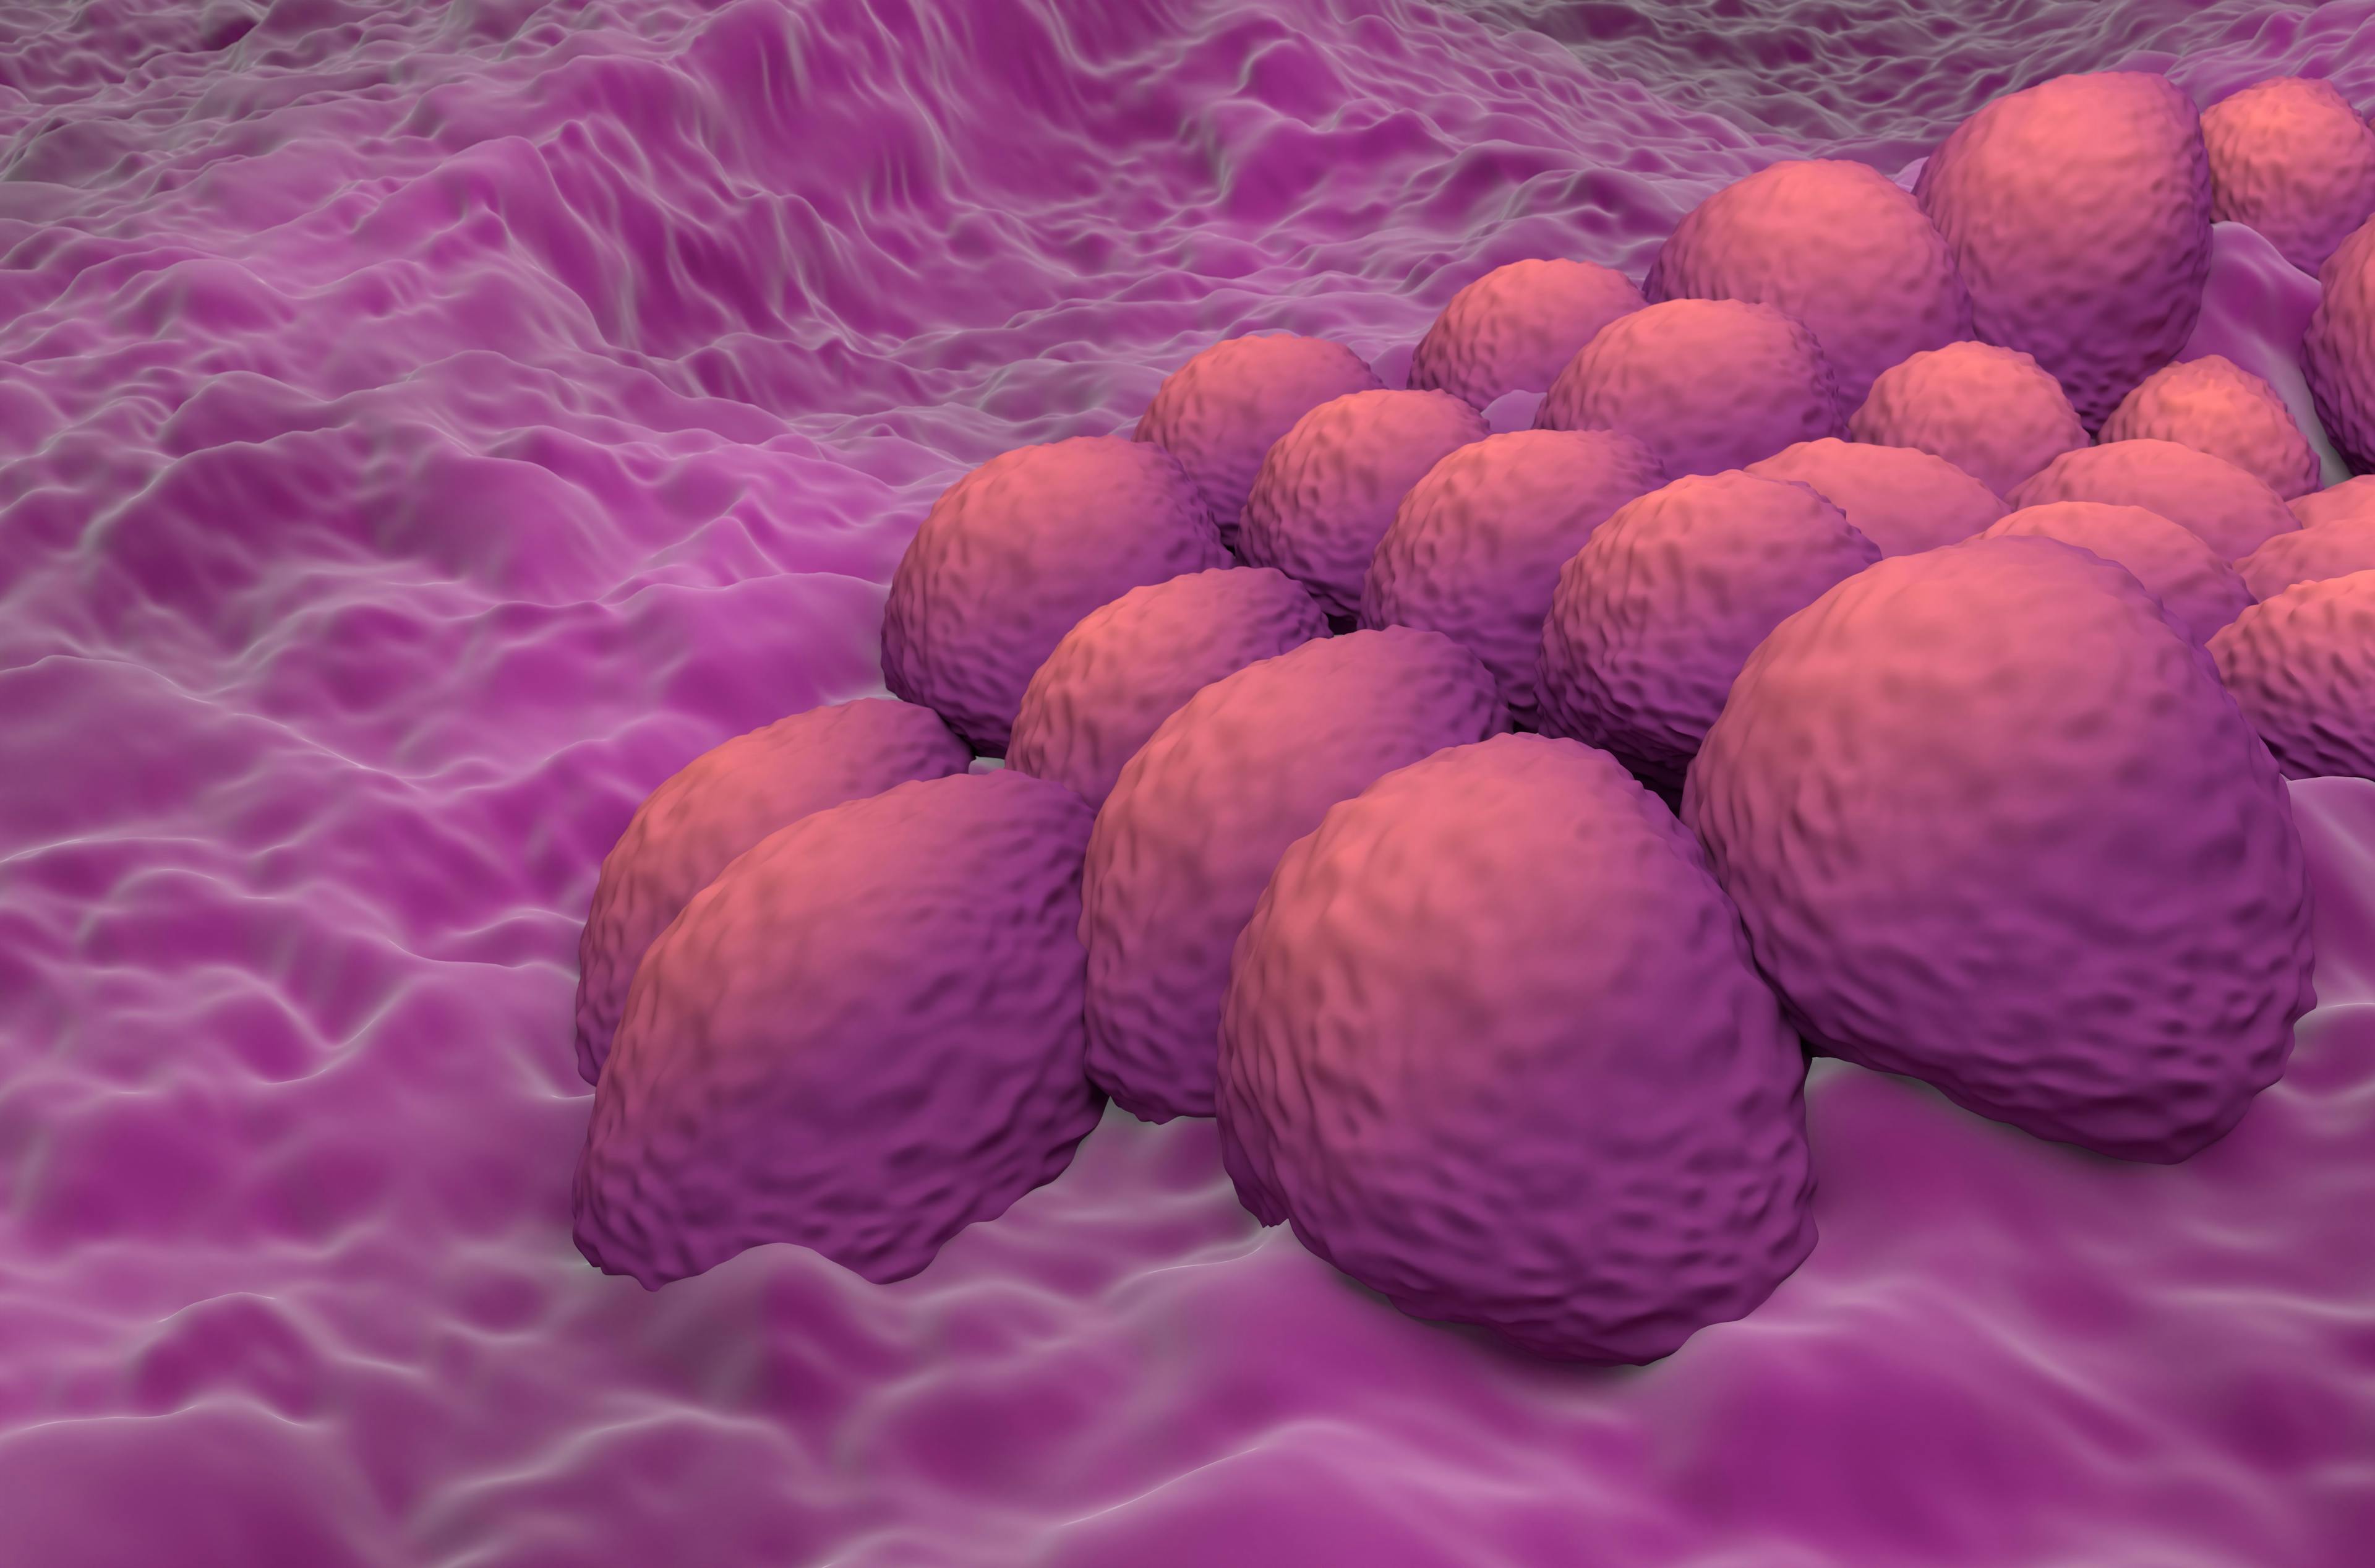 Endometrial cancer cells (adenocarcinoma) in the uterus: ©LASZLO - stock.adobe.com